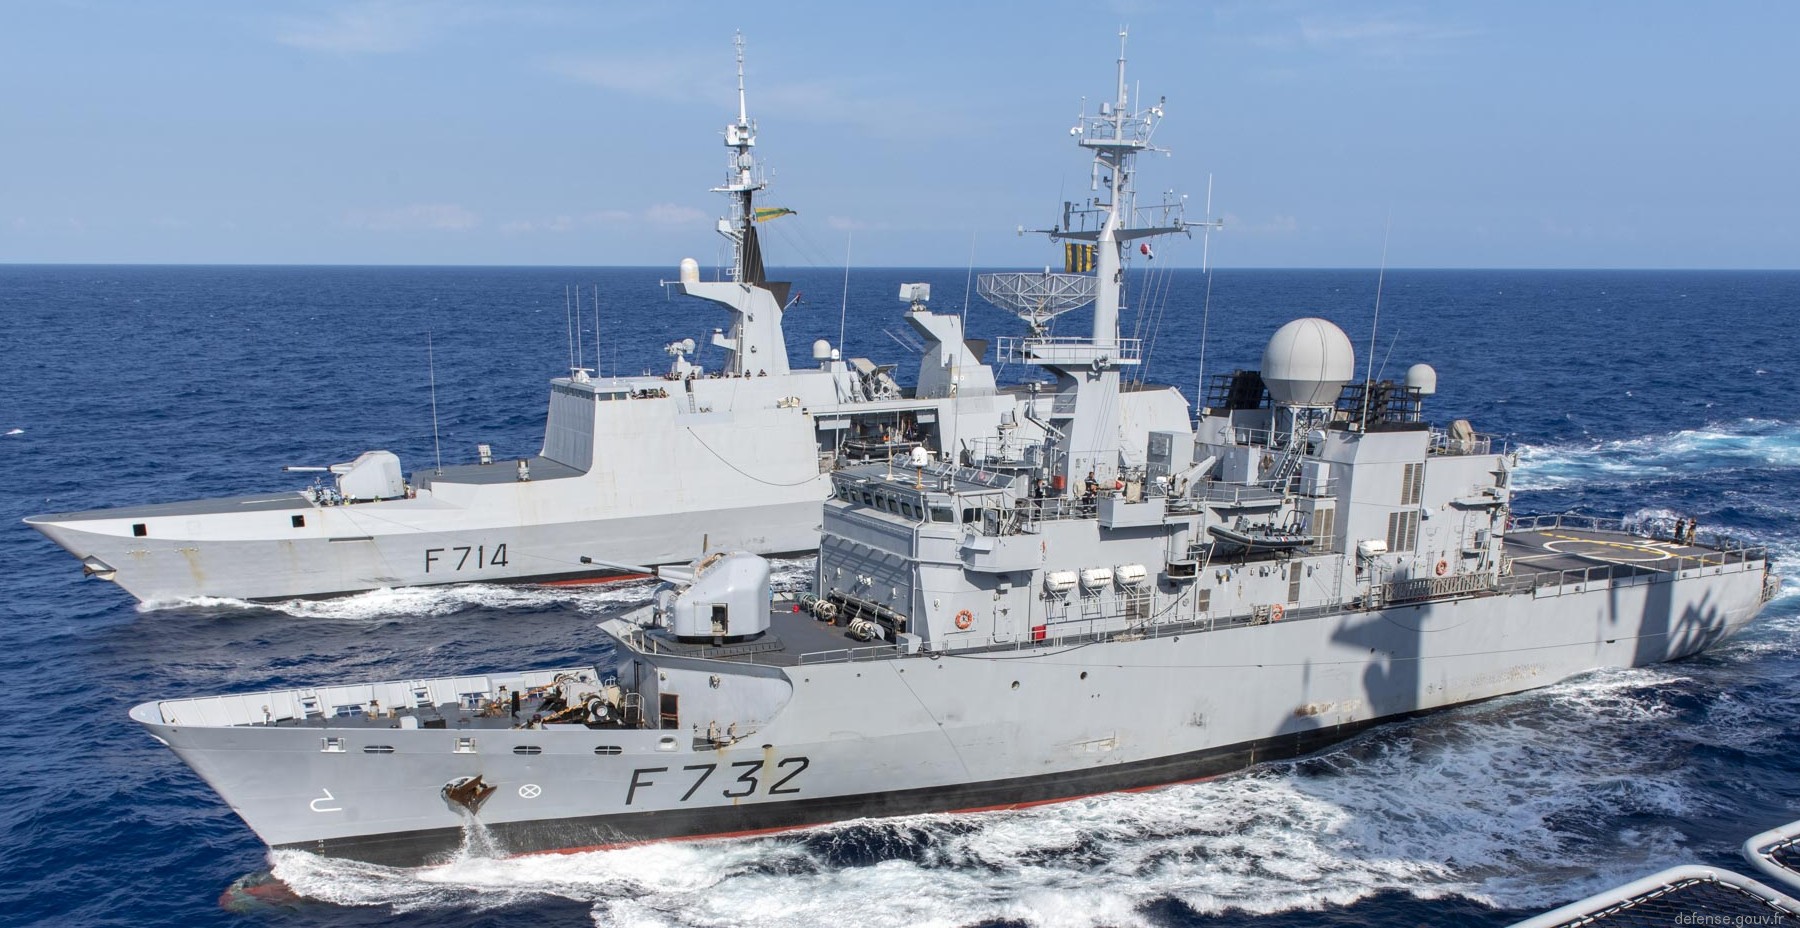 f-732 fs nivose floreal class frigate french navy marine nationale fregate surveillance 10